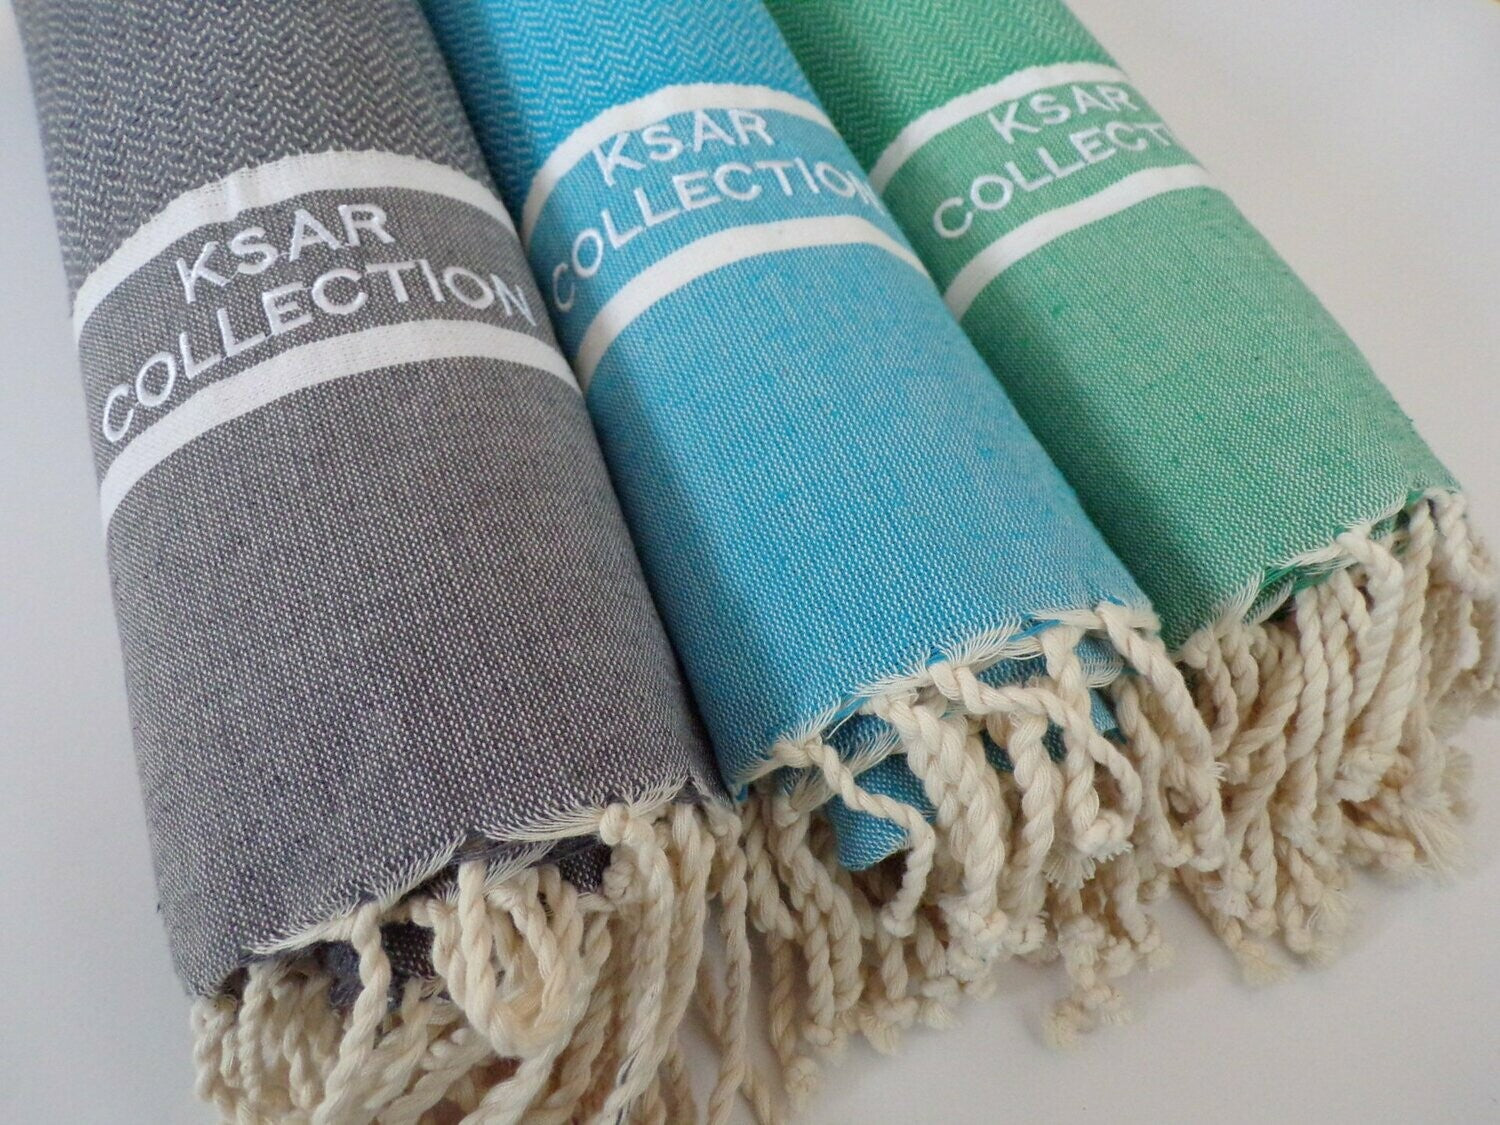 grey blue green ksar collection fouta towels